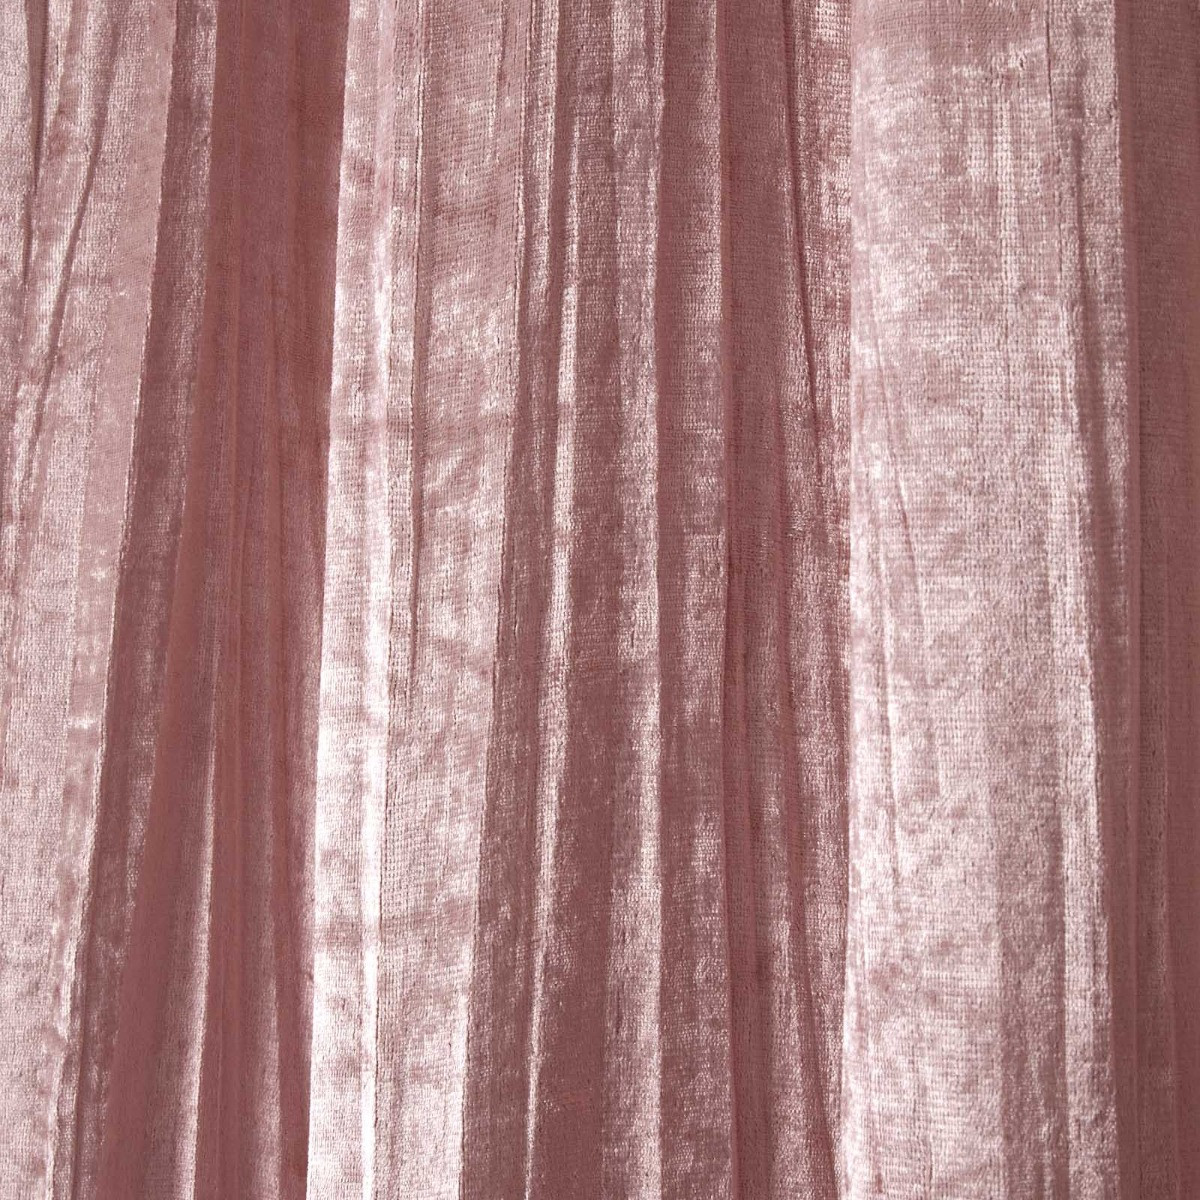 Sienna Home Valencia Crinkle Crushed Velvet Eyelet Curtains - Blush>